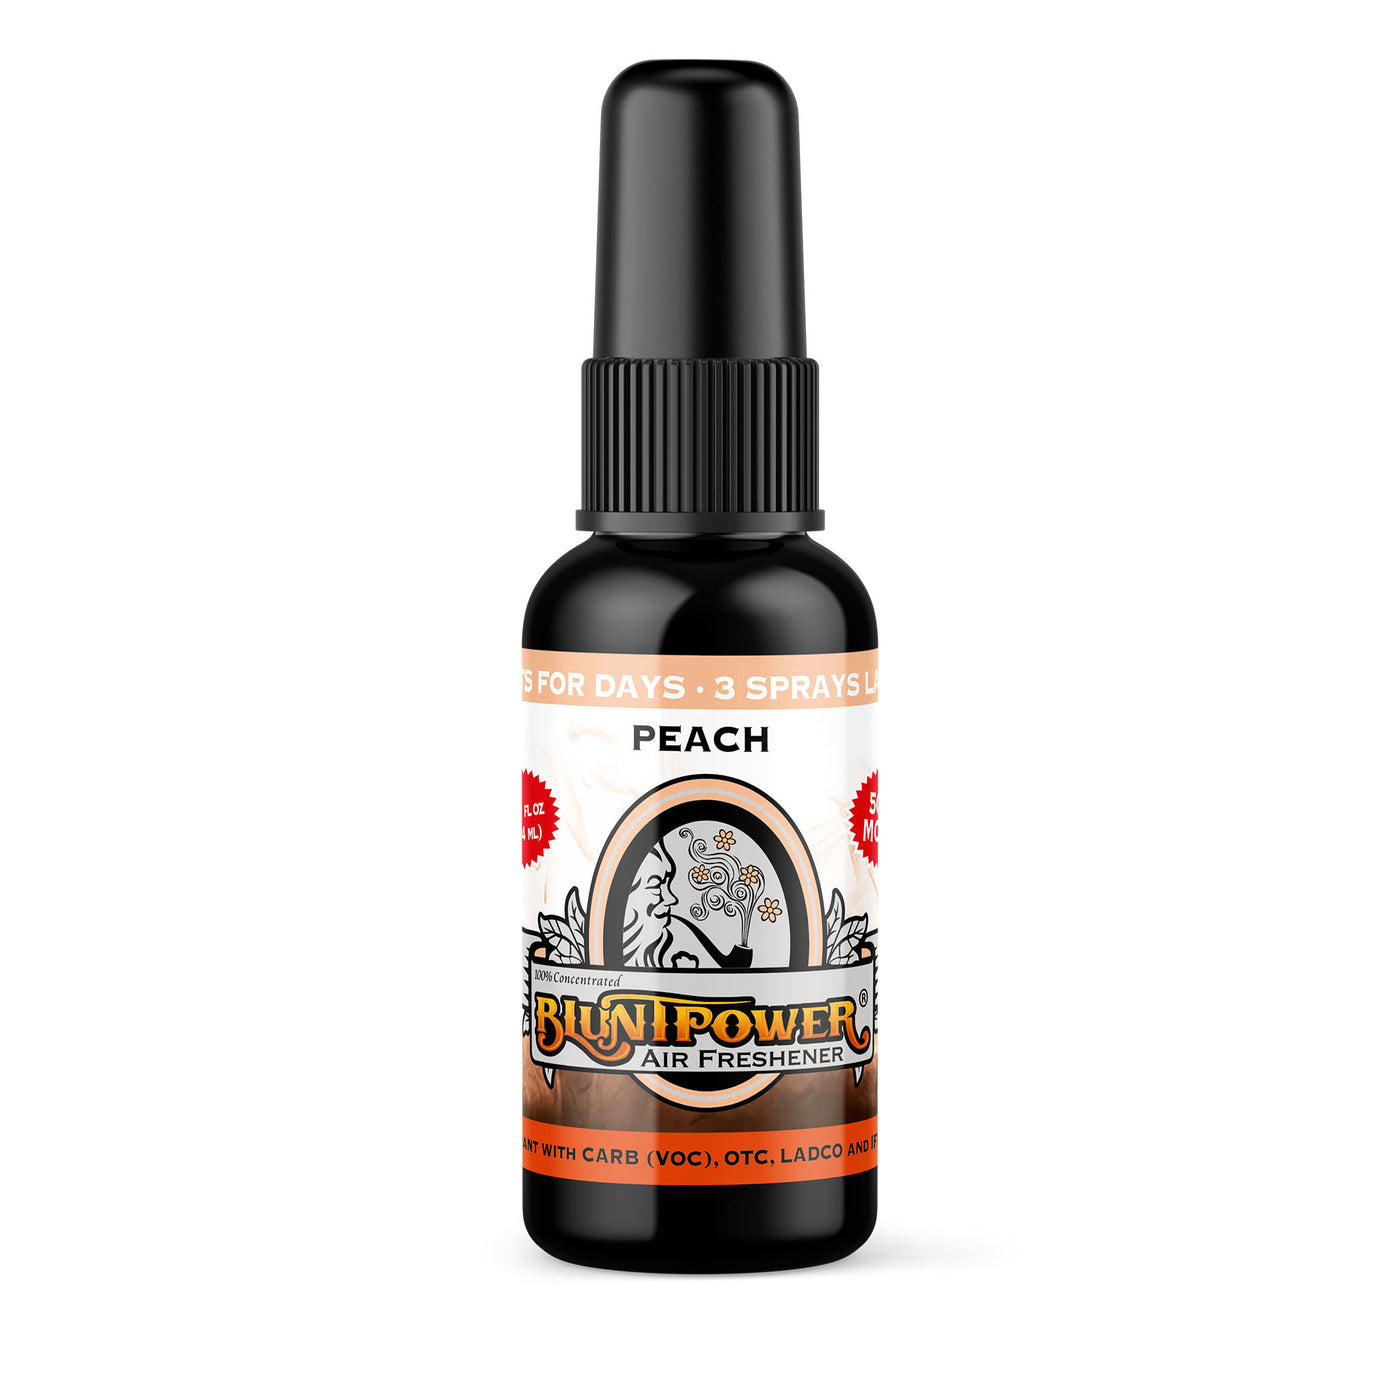 Peach Air Freshener Spray